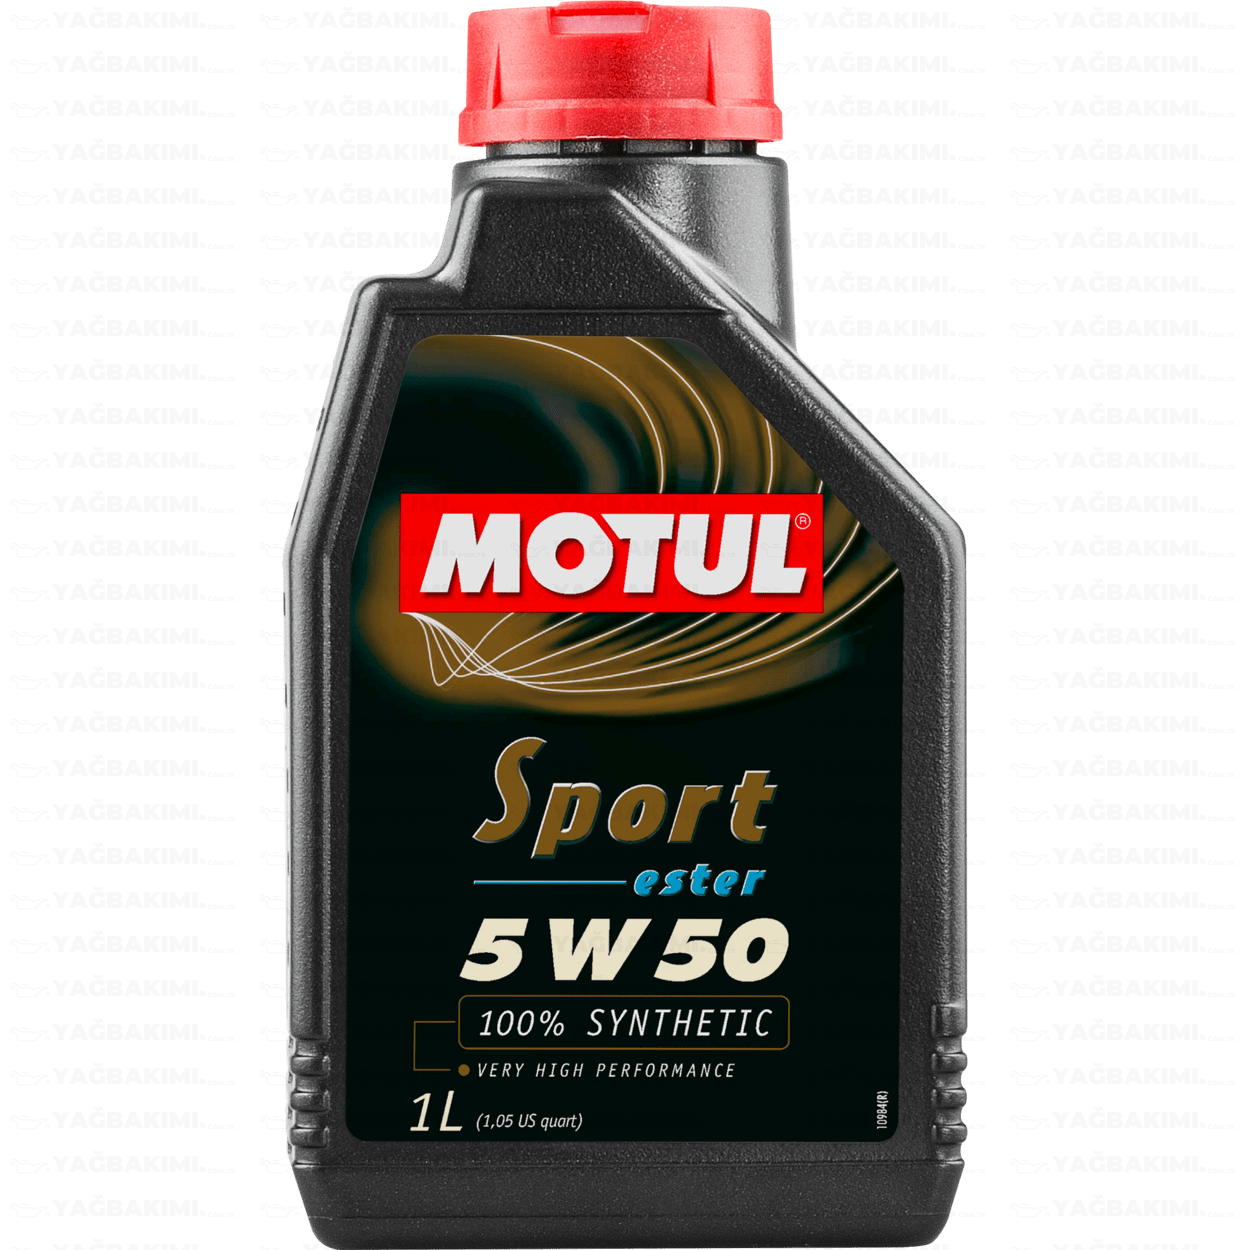 Motul Sport 5W50